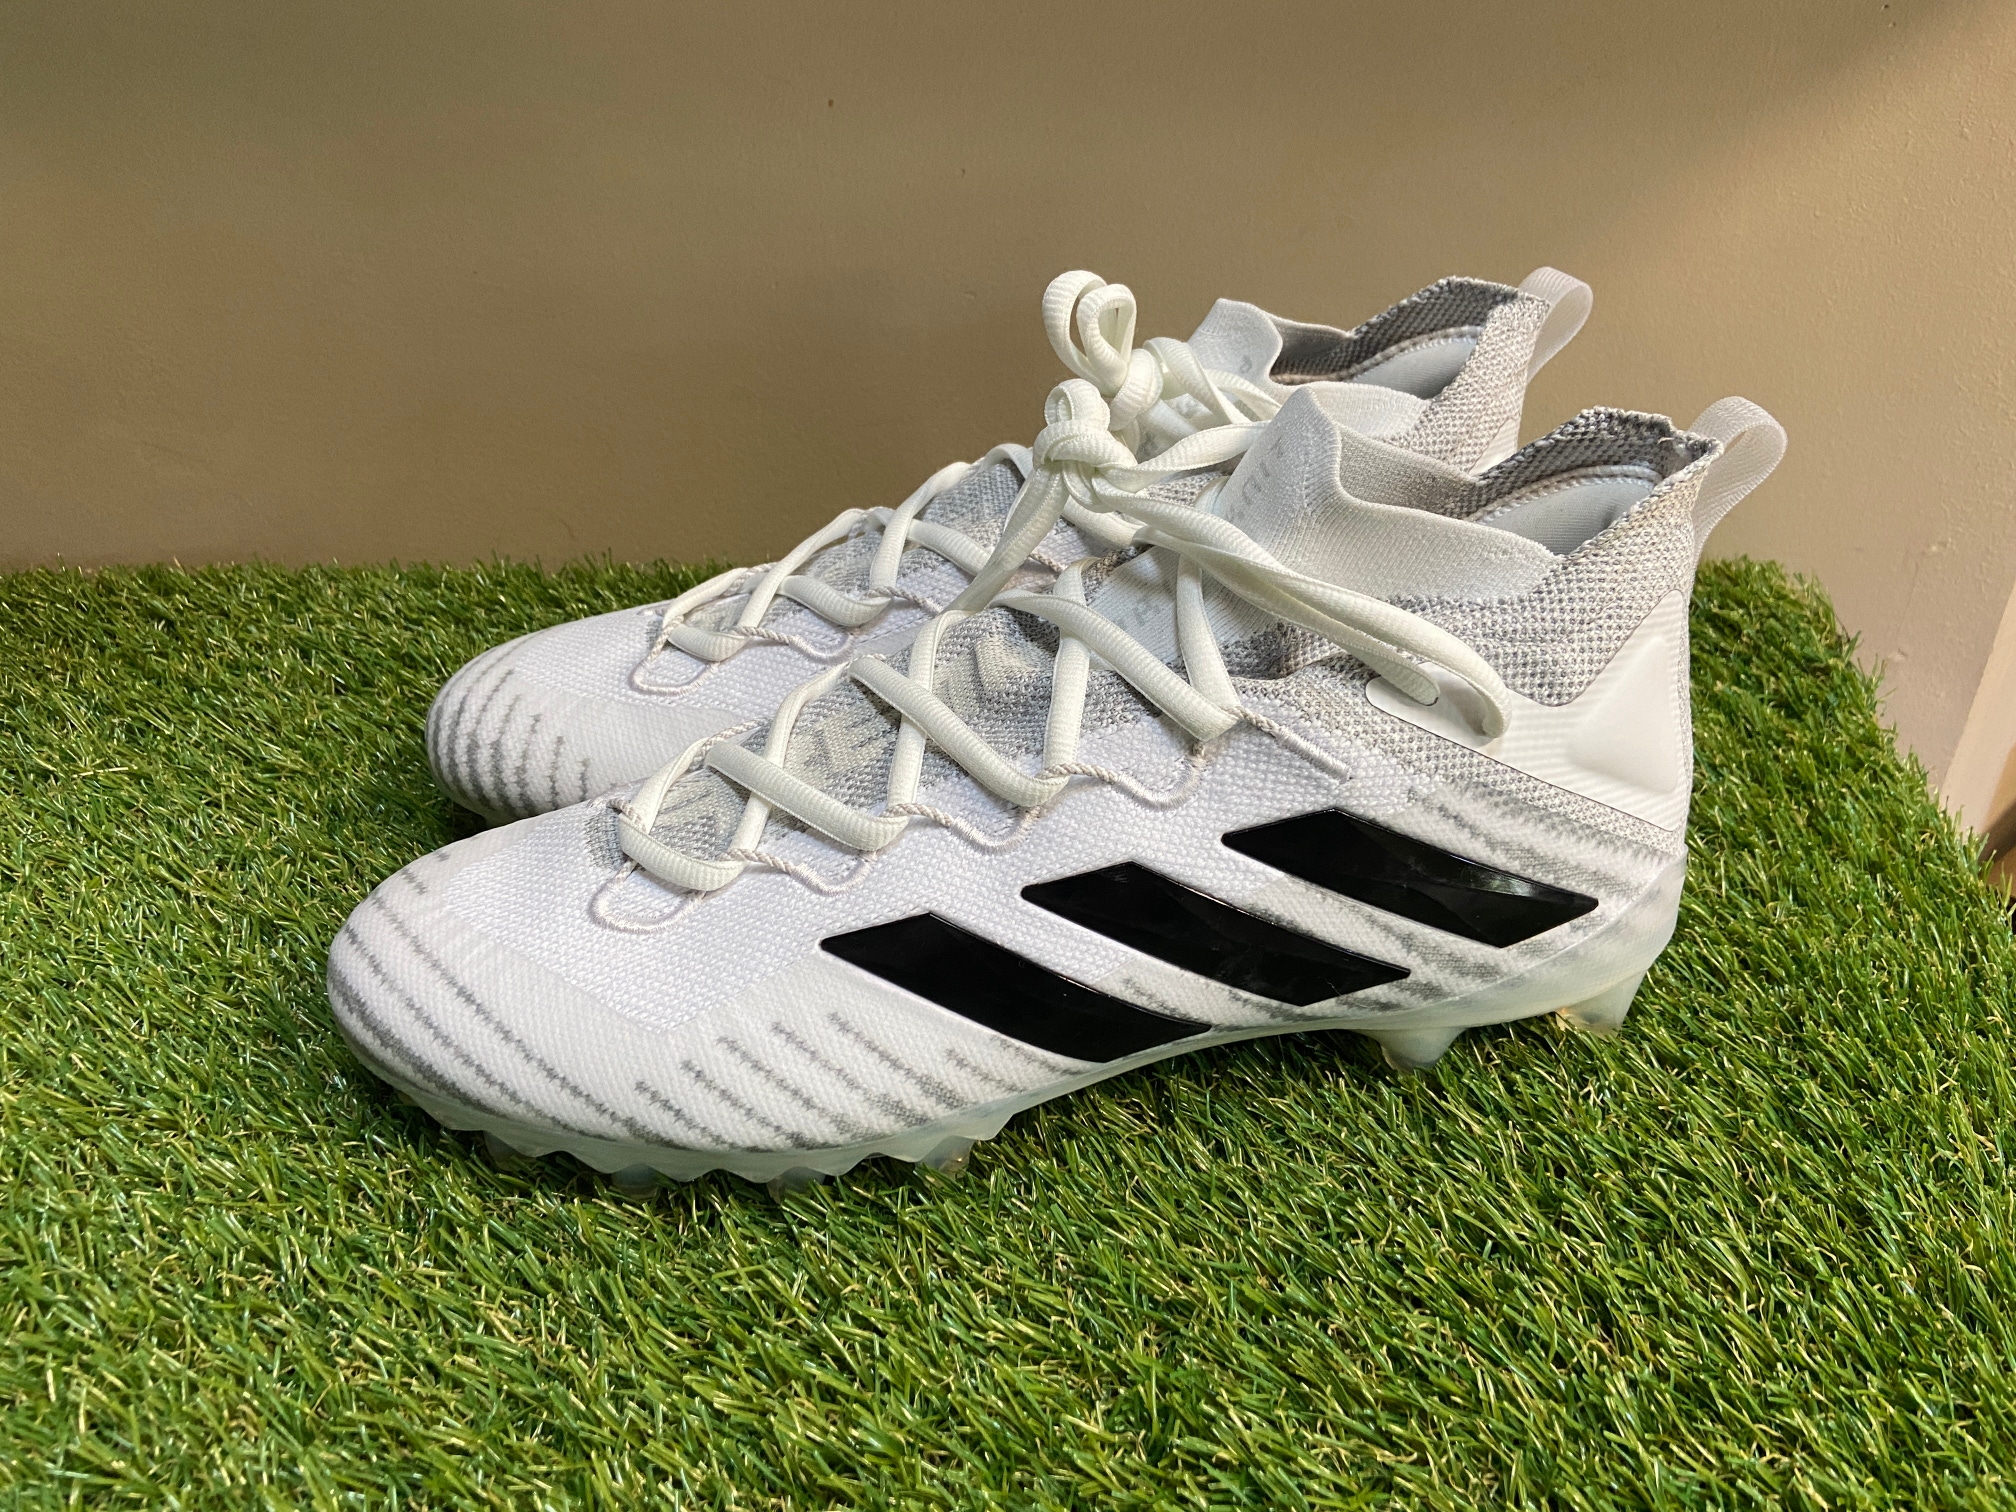 Adidas Freak Ultra Primeknit Football Cleats FX1296 White Grey Men Size 10 NEW